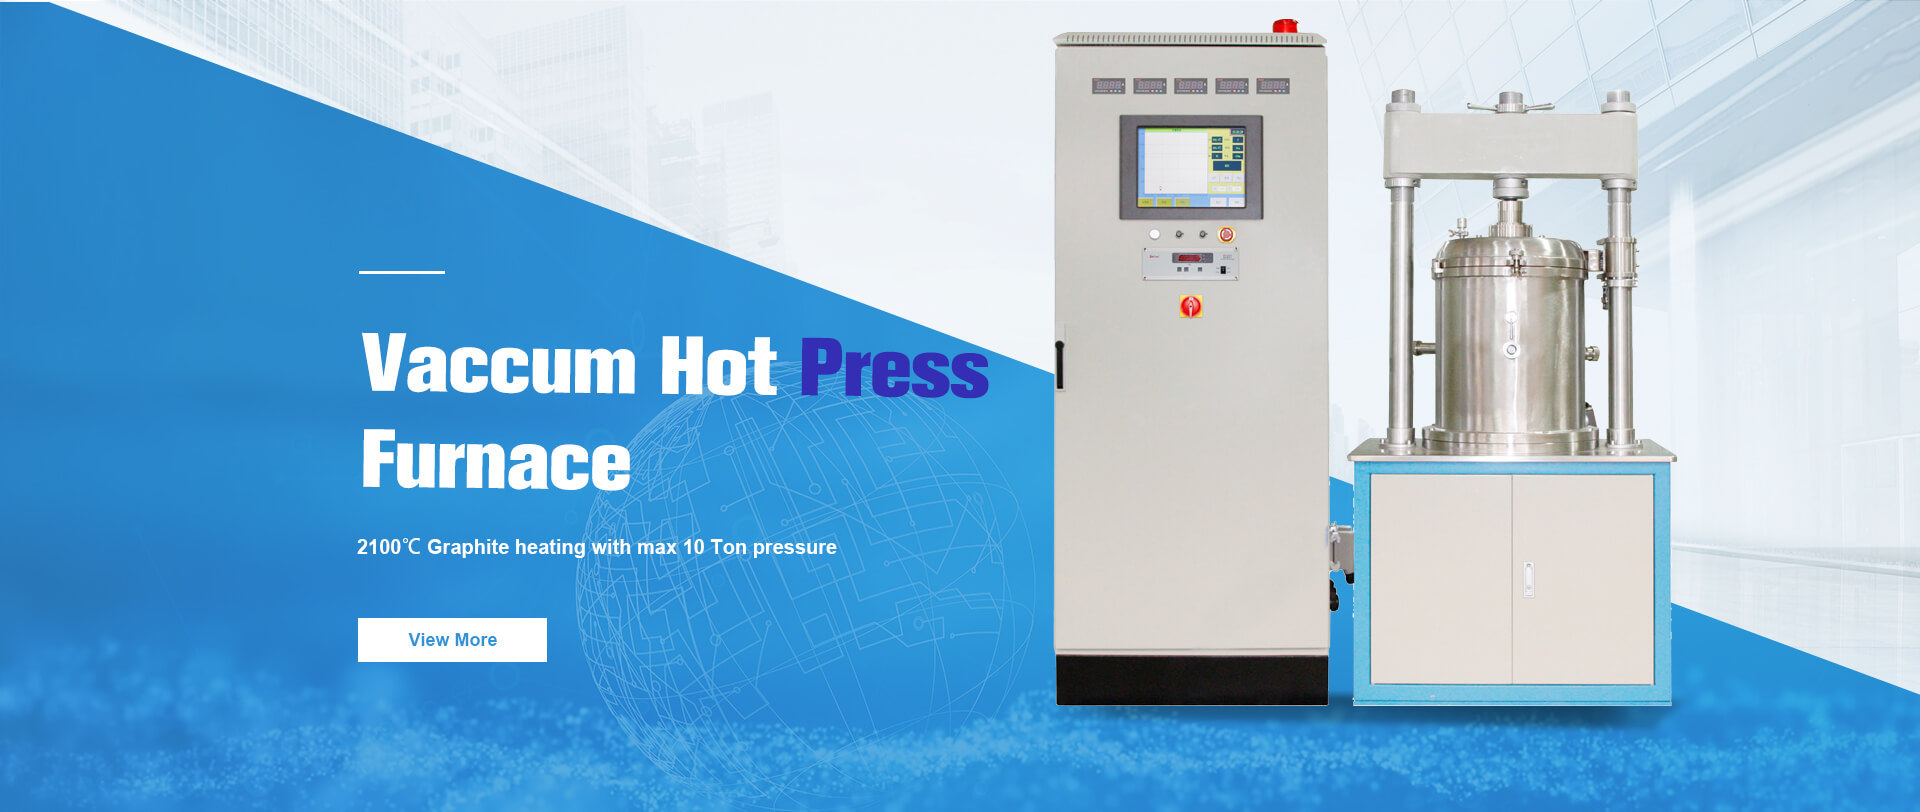 Vacuum Hot Press Furnace